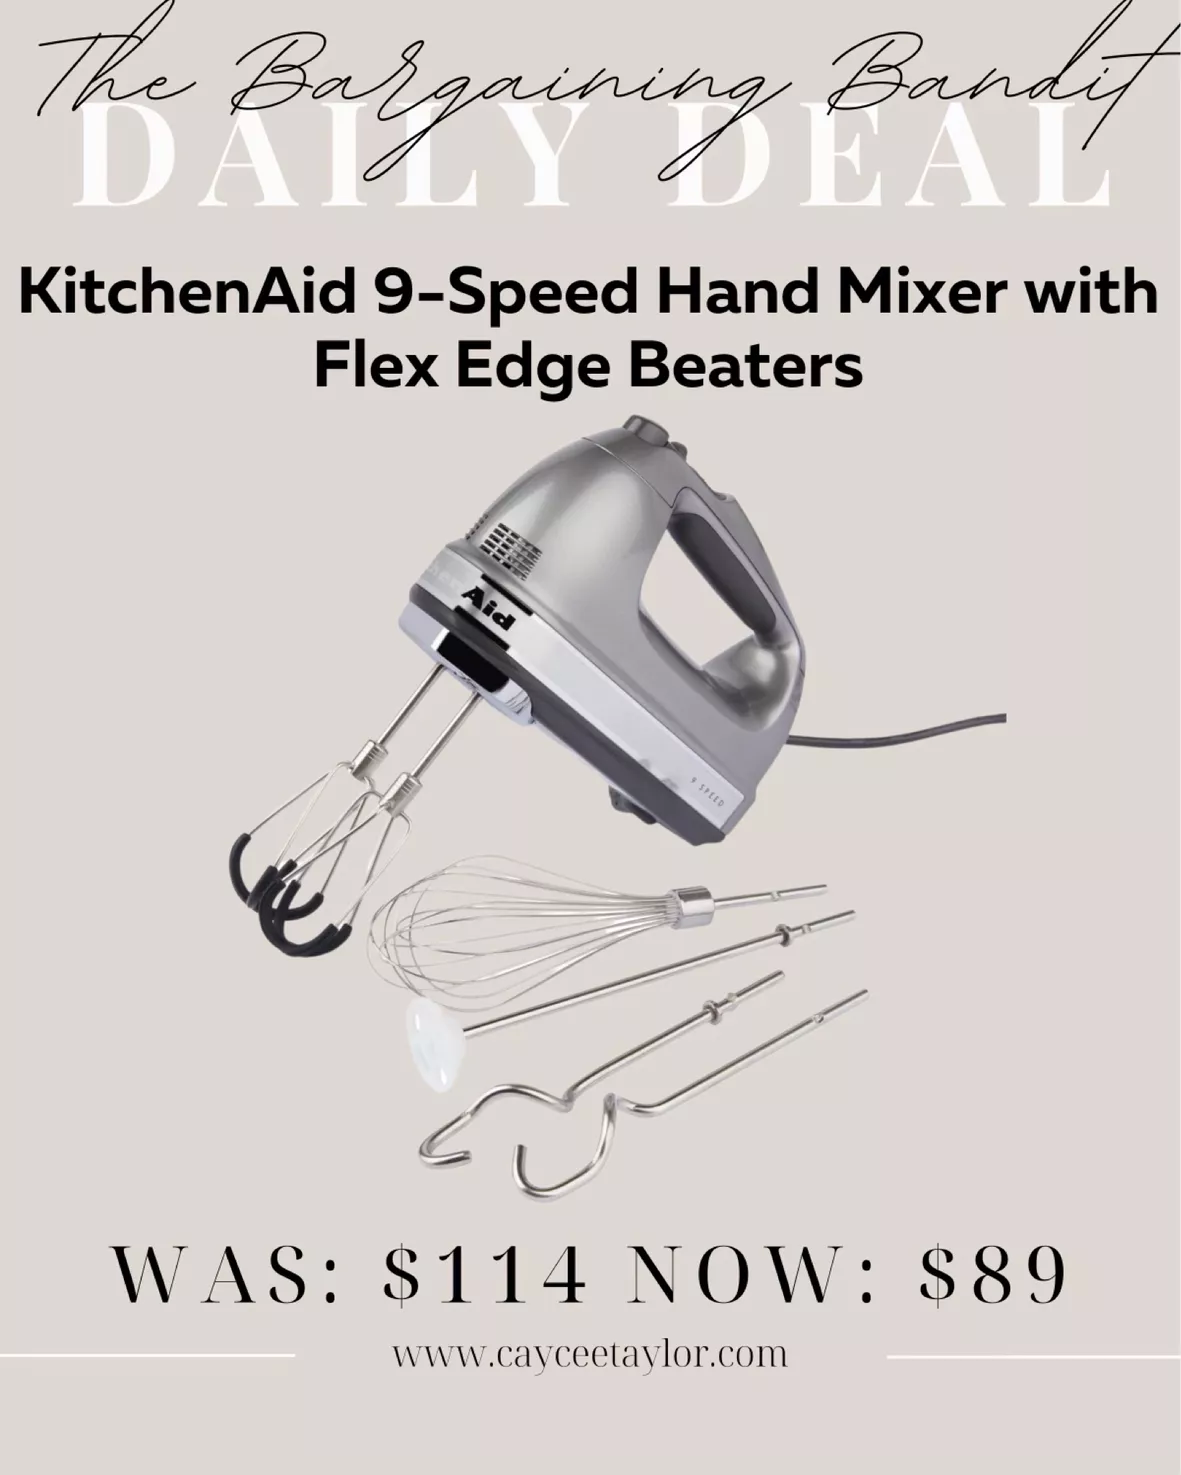 Set of 2 flex edge beaters for hand mixers - KitchenAid